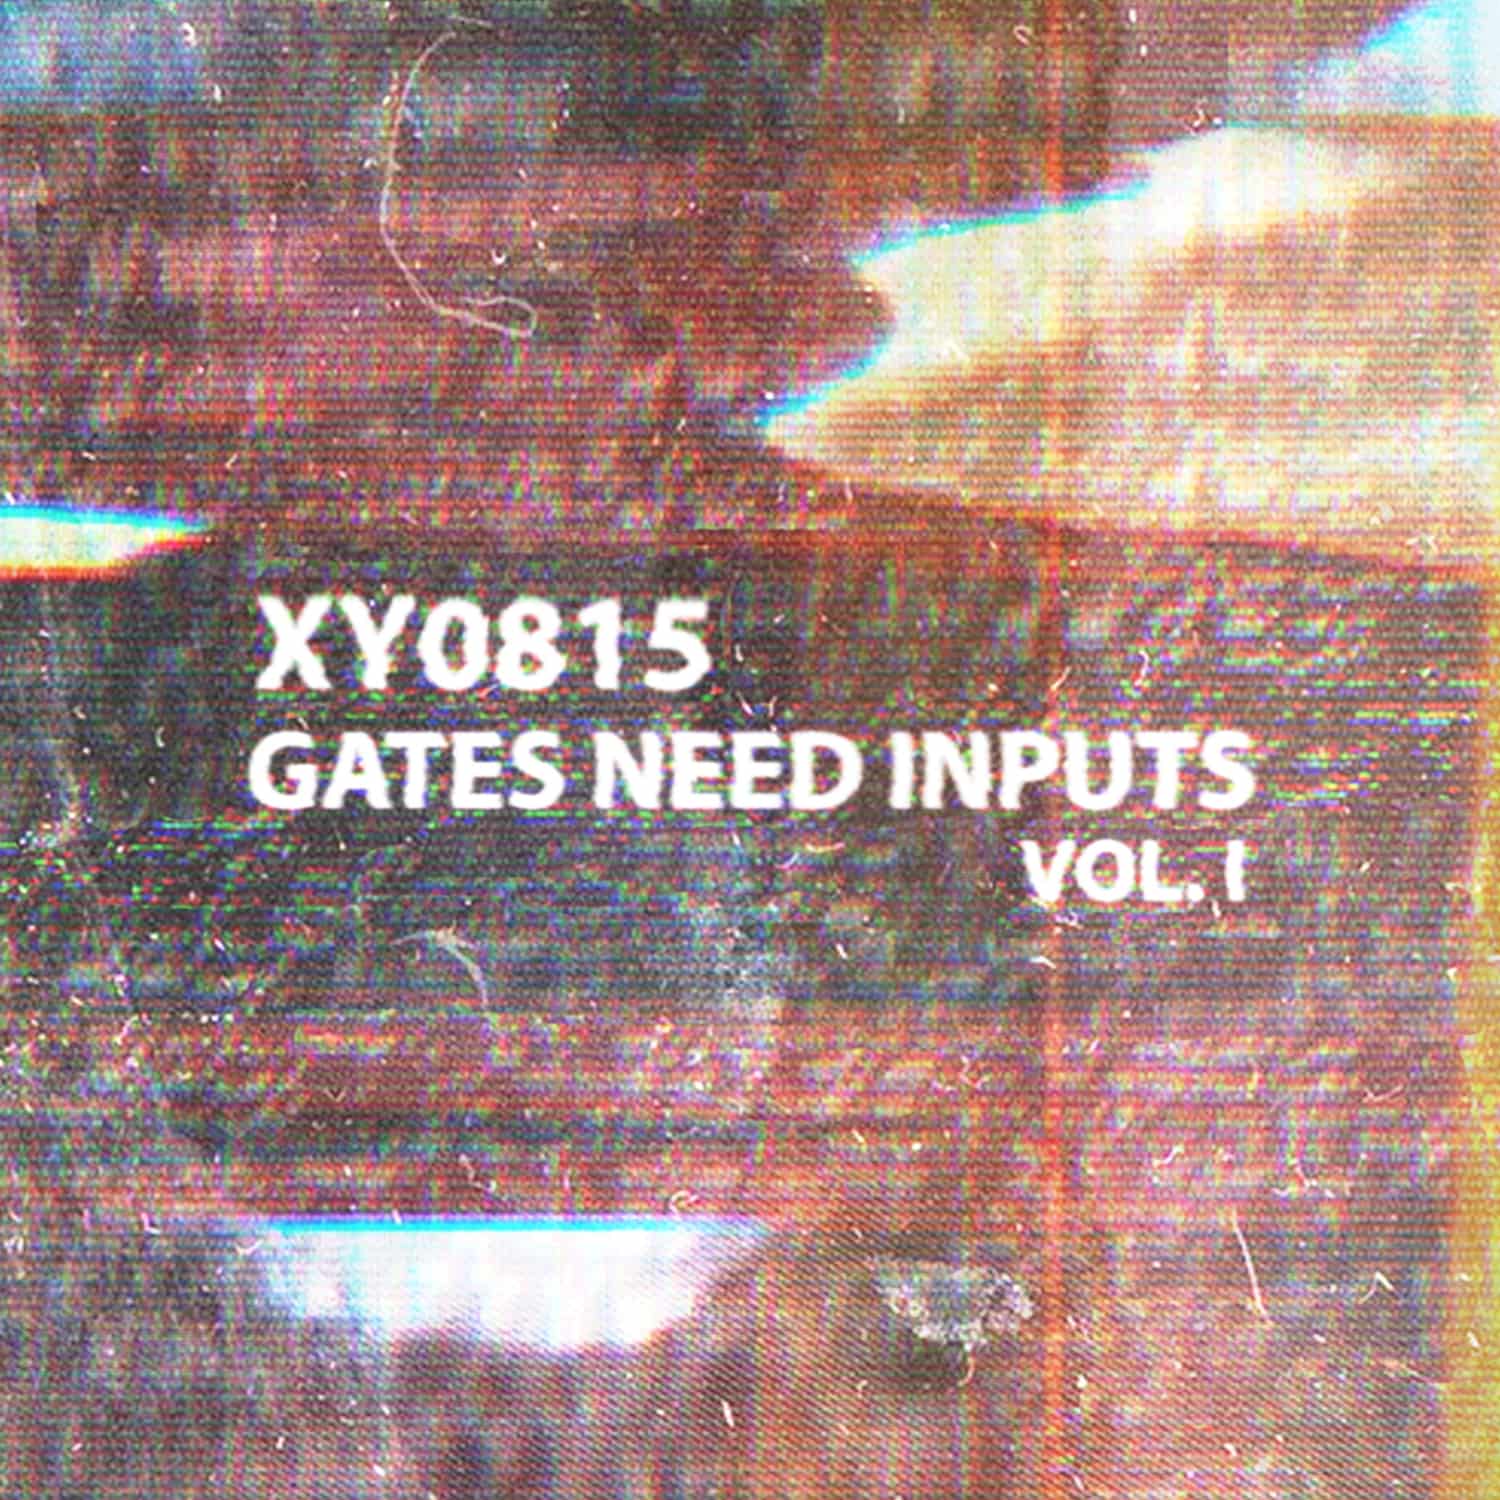 XY0815 - GATES NEED INPUTS VOL. I 